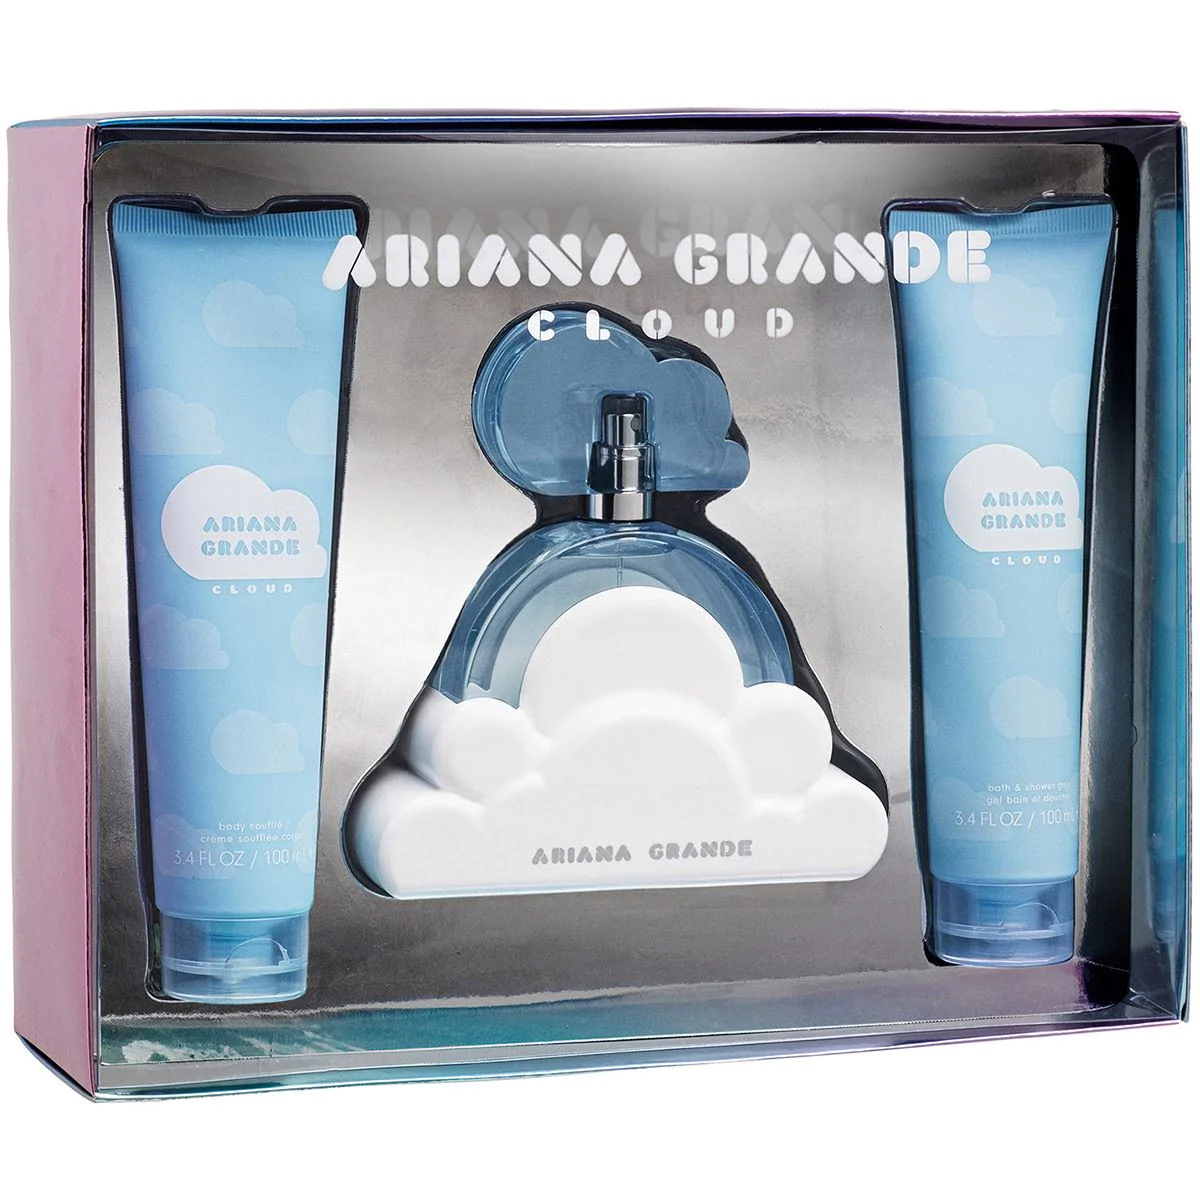 Ariana Grande Cloud 3 Piece Gift Set Eau De Parfum 100ml - Body Souffle 100ml - Bath & Shower Gel 100ml